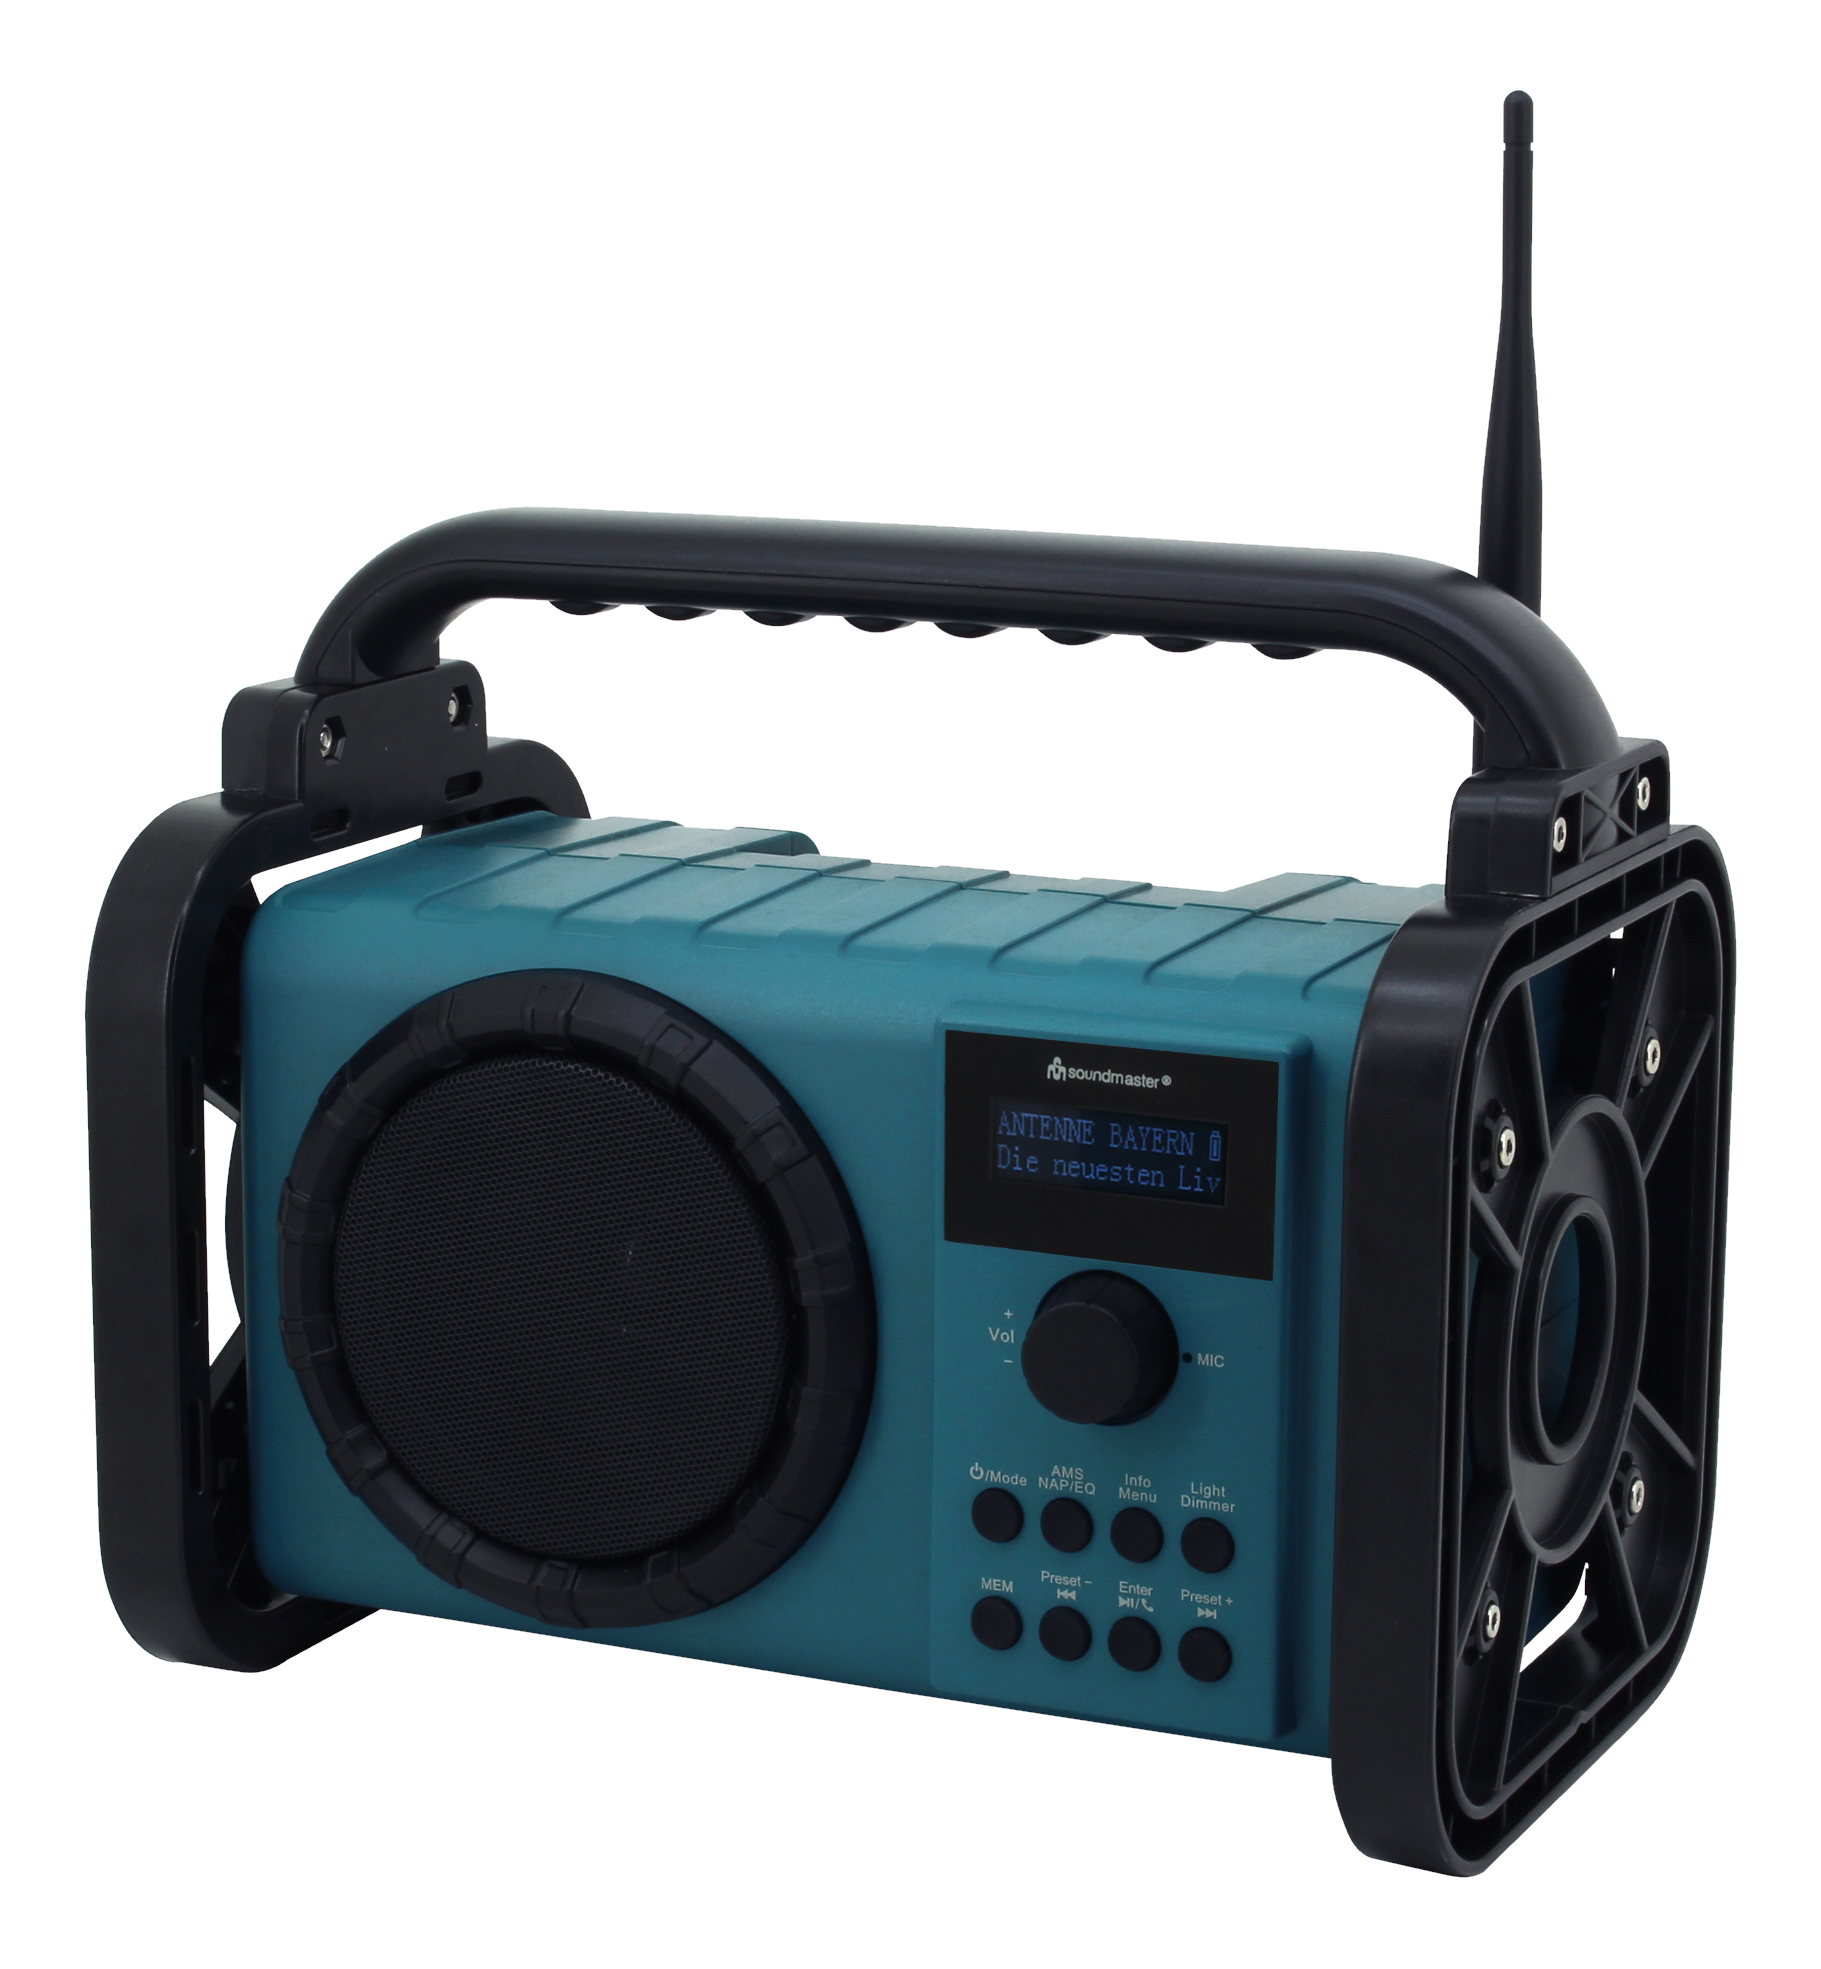 SOUNDMASTER DAB80 - Radio da cantiere (FM, DAB+, Blu/Nero)